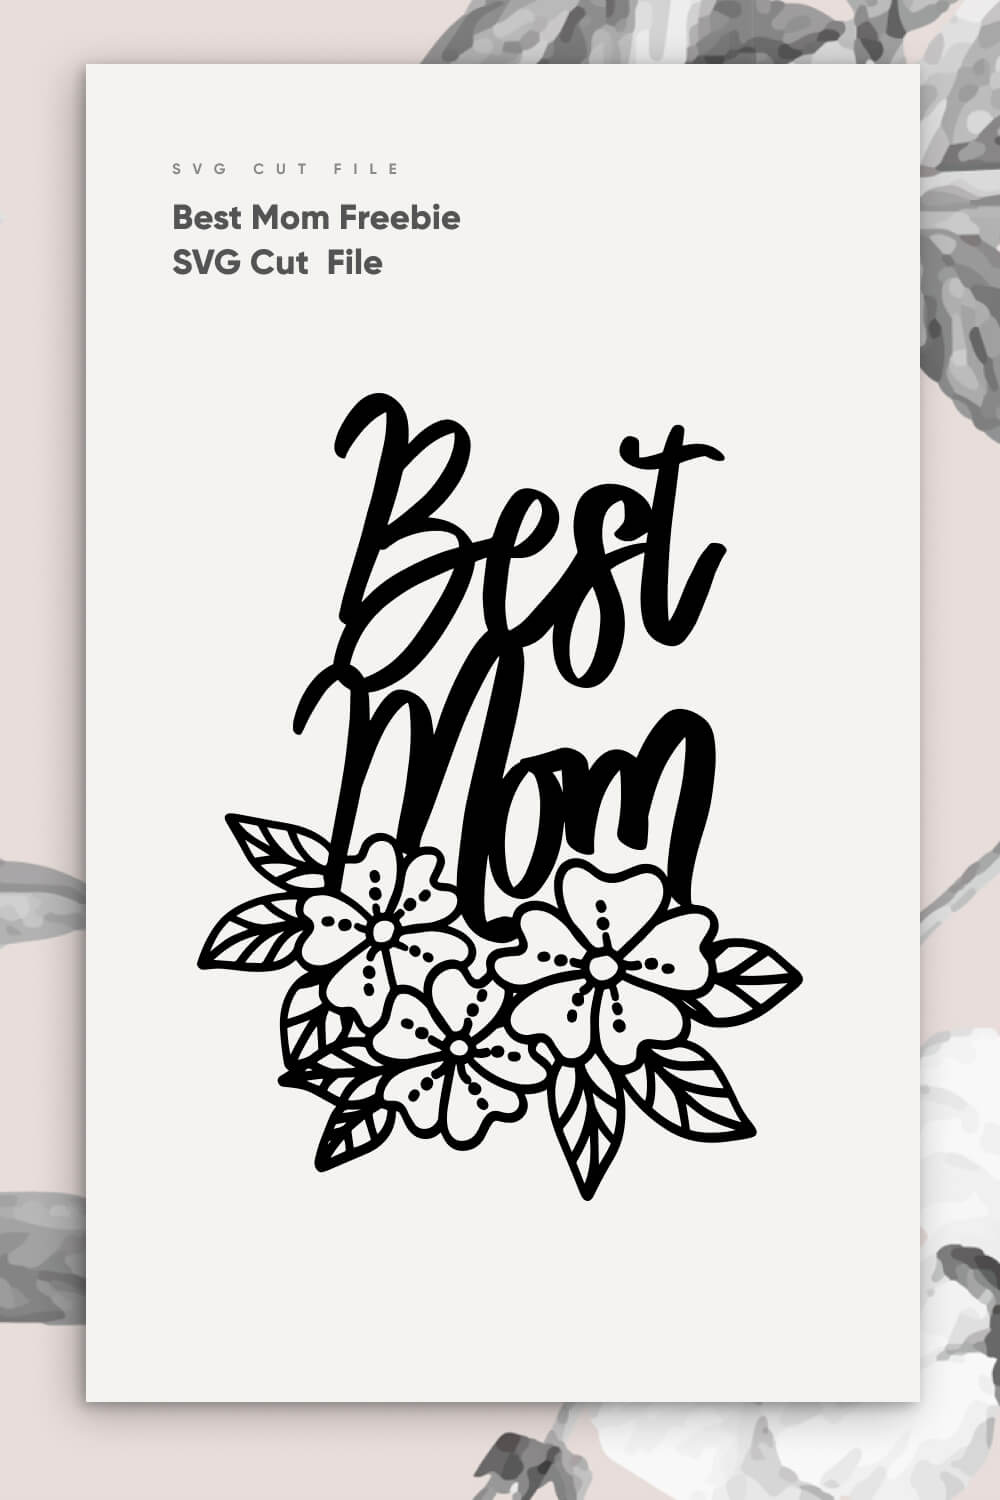 Best Mom Freebie SVG Cut File pinterest.